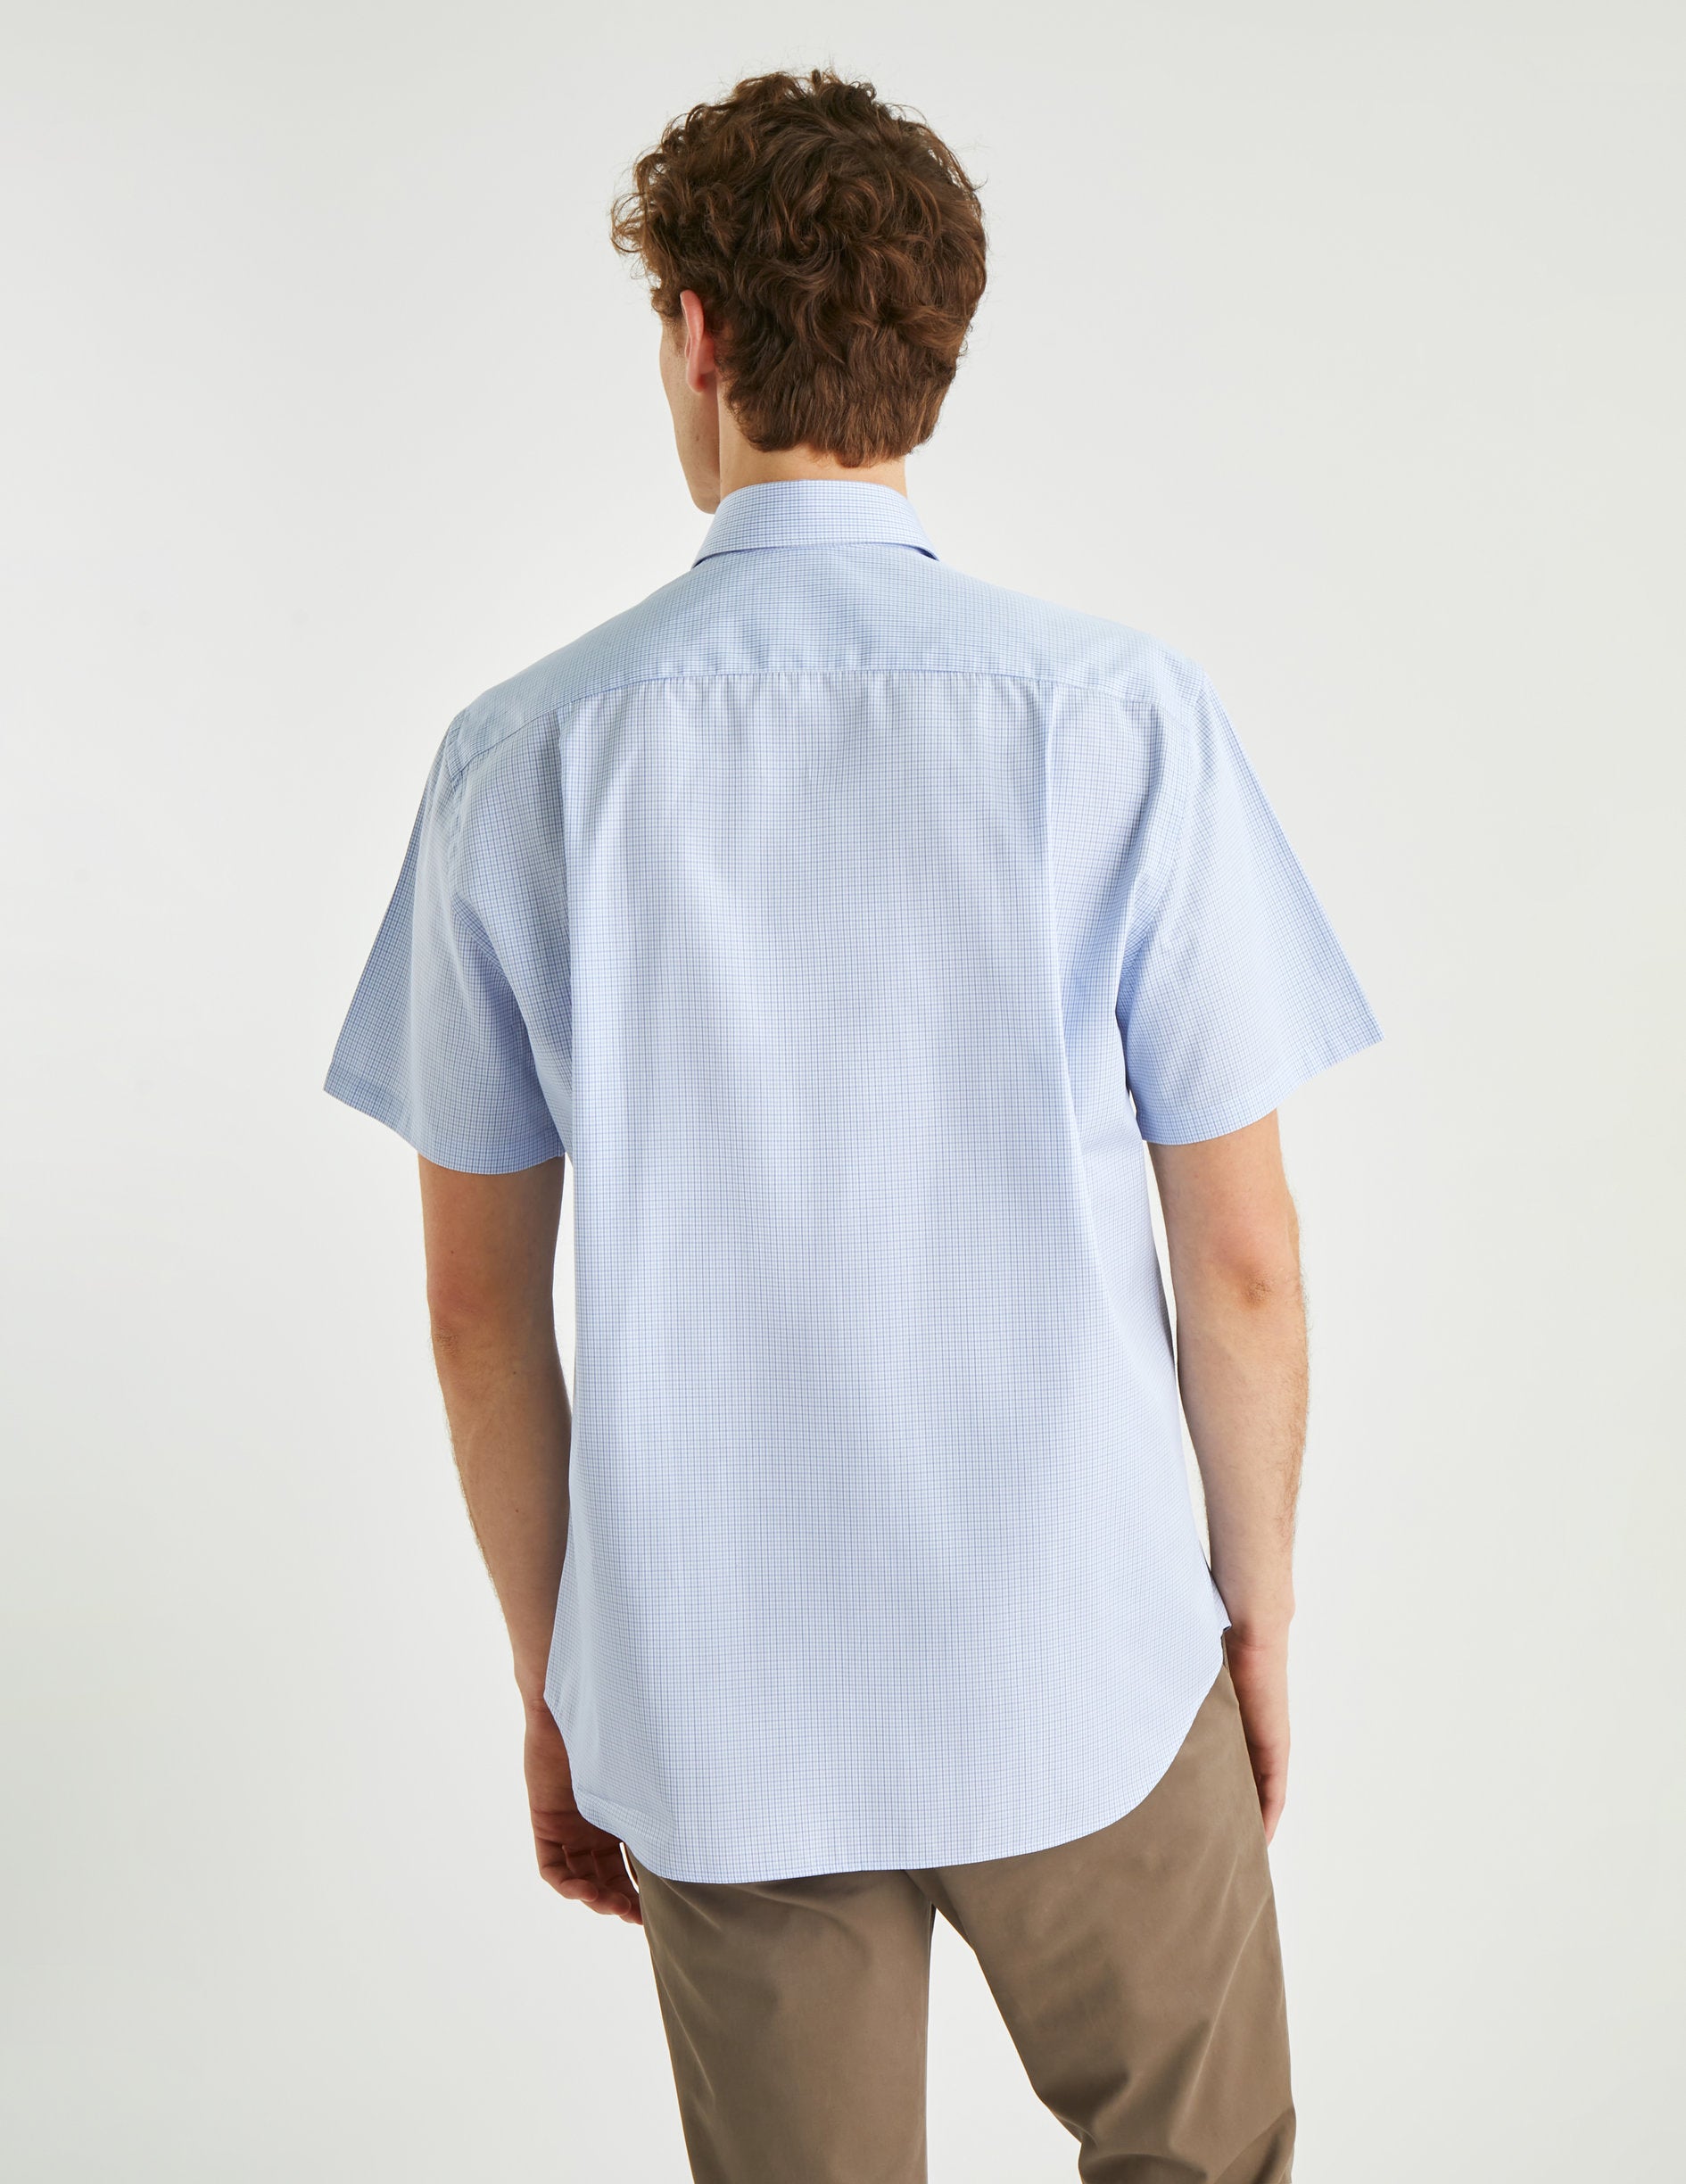 Classic short sleeve blue checked shirt - Poplin - American Collar